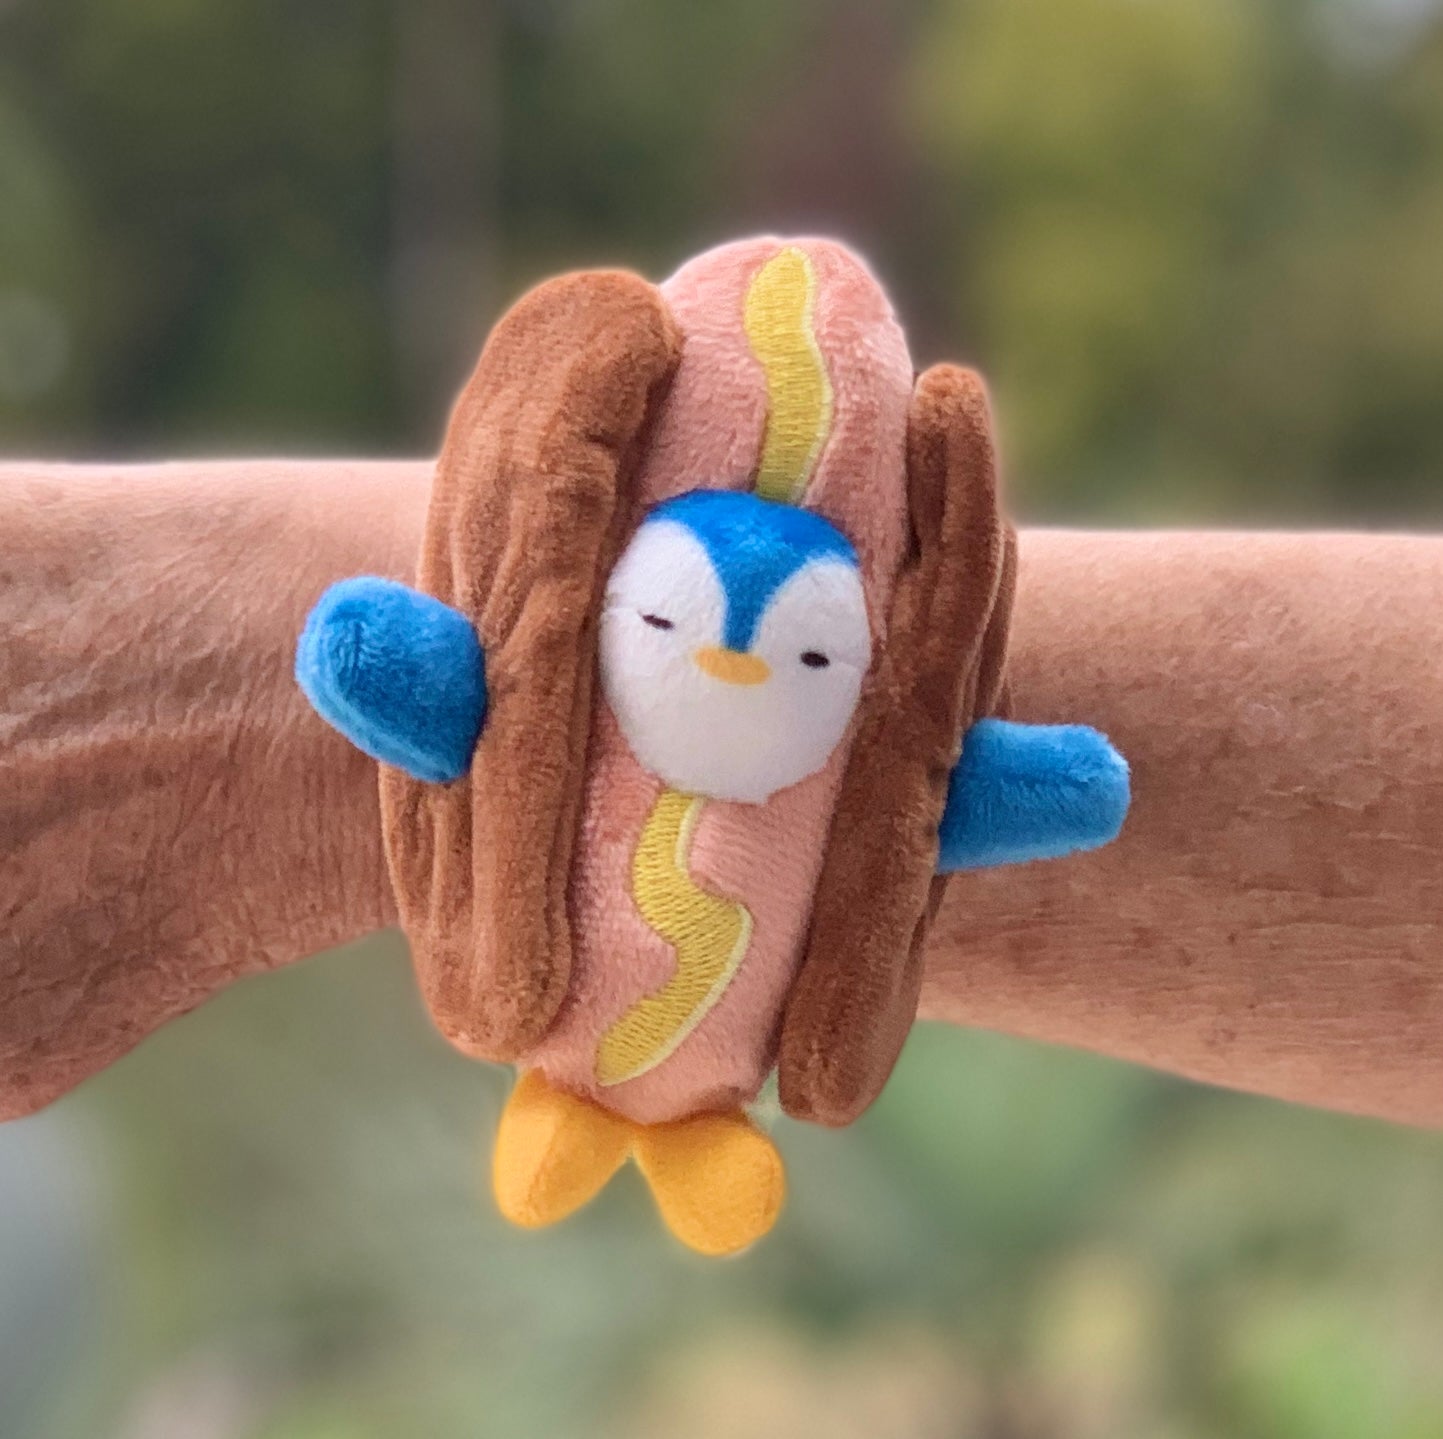 WRIST WIENER - Cute and Cuddly Penguin in a Hot Dog Costume Slap Bracelet